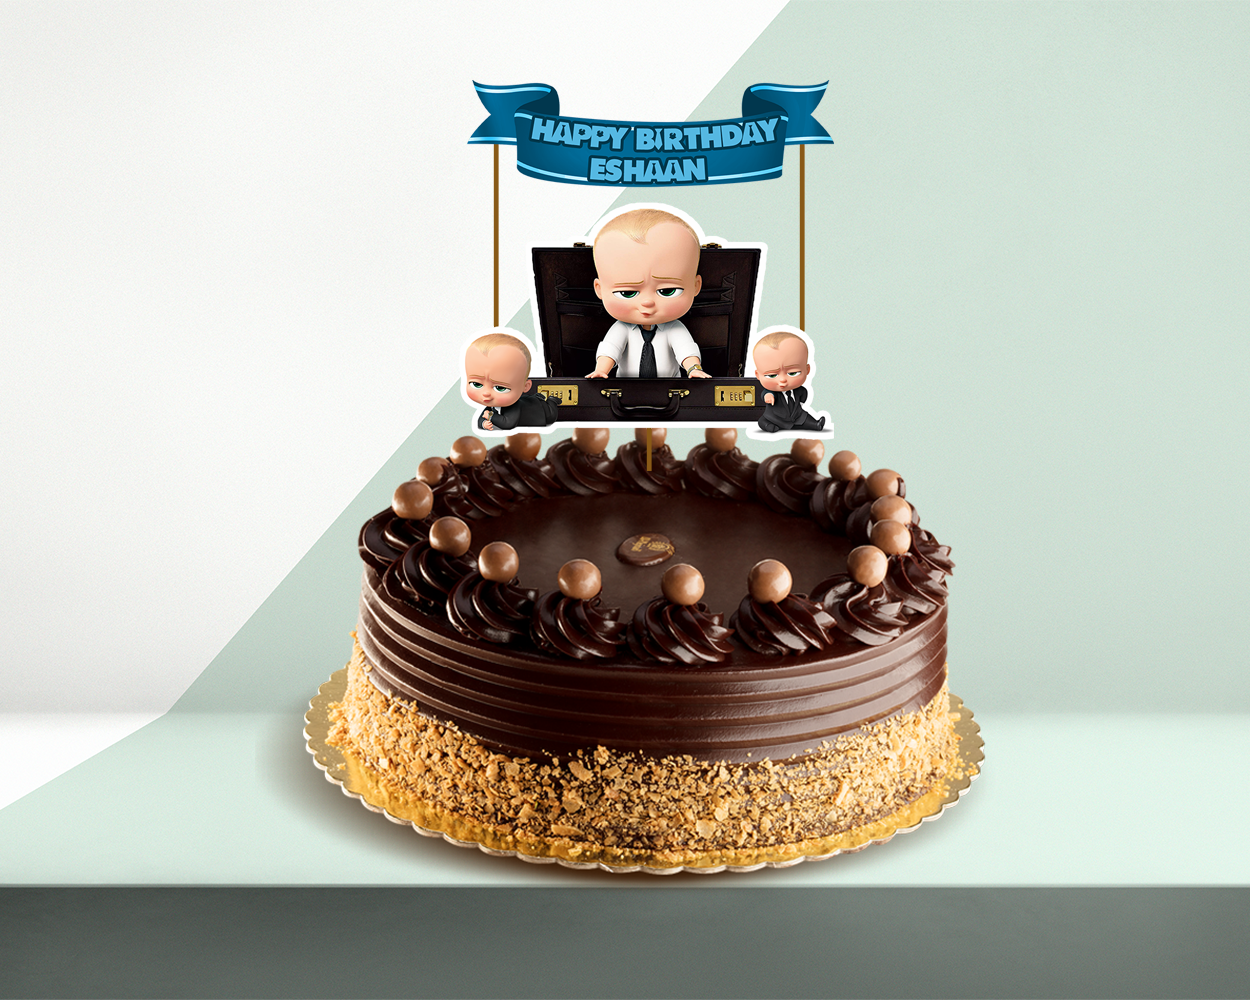 Baby Boss Cake | Bakers Oven - Order Online Now